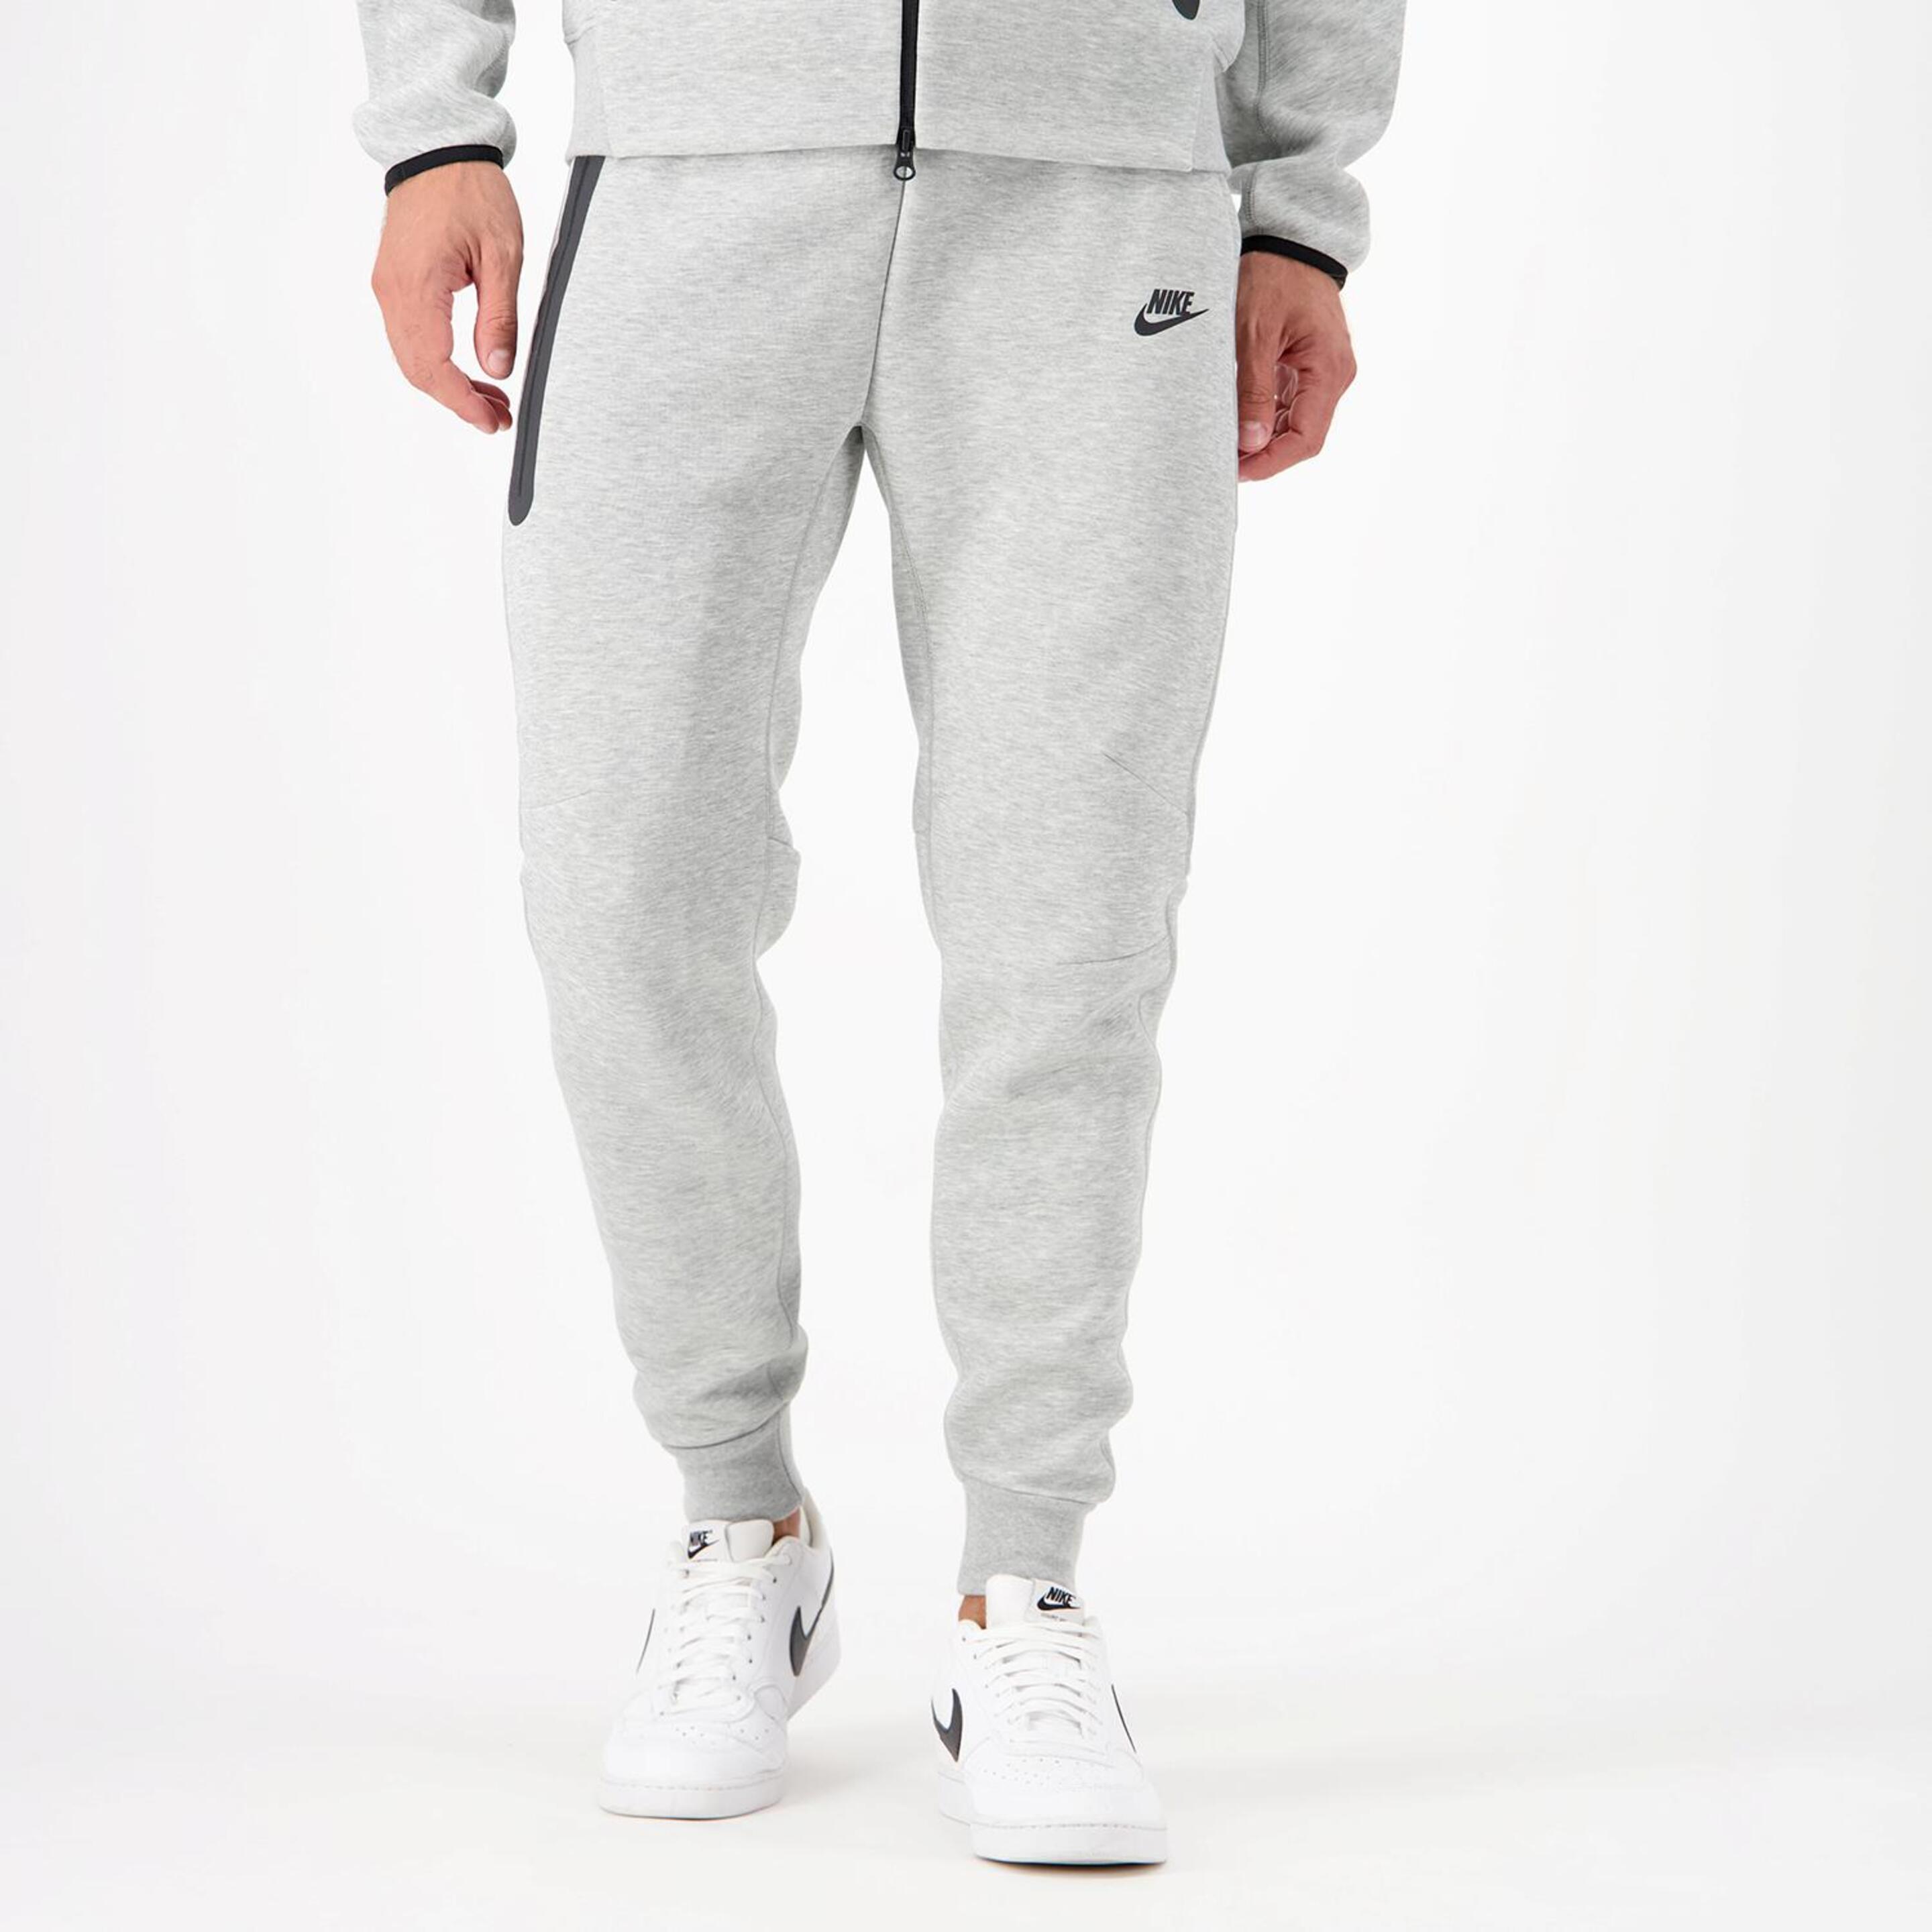 Nike Tech - gris - Pantalón Chándal Hombre